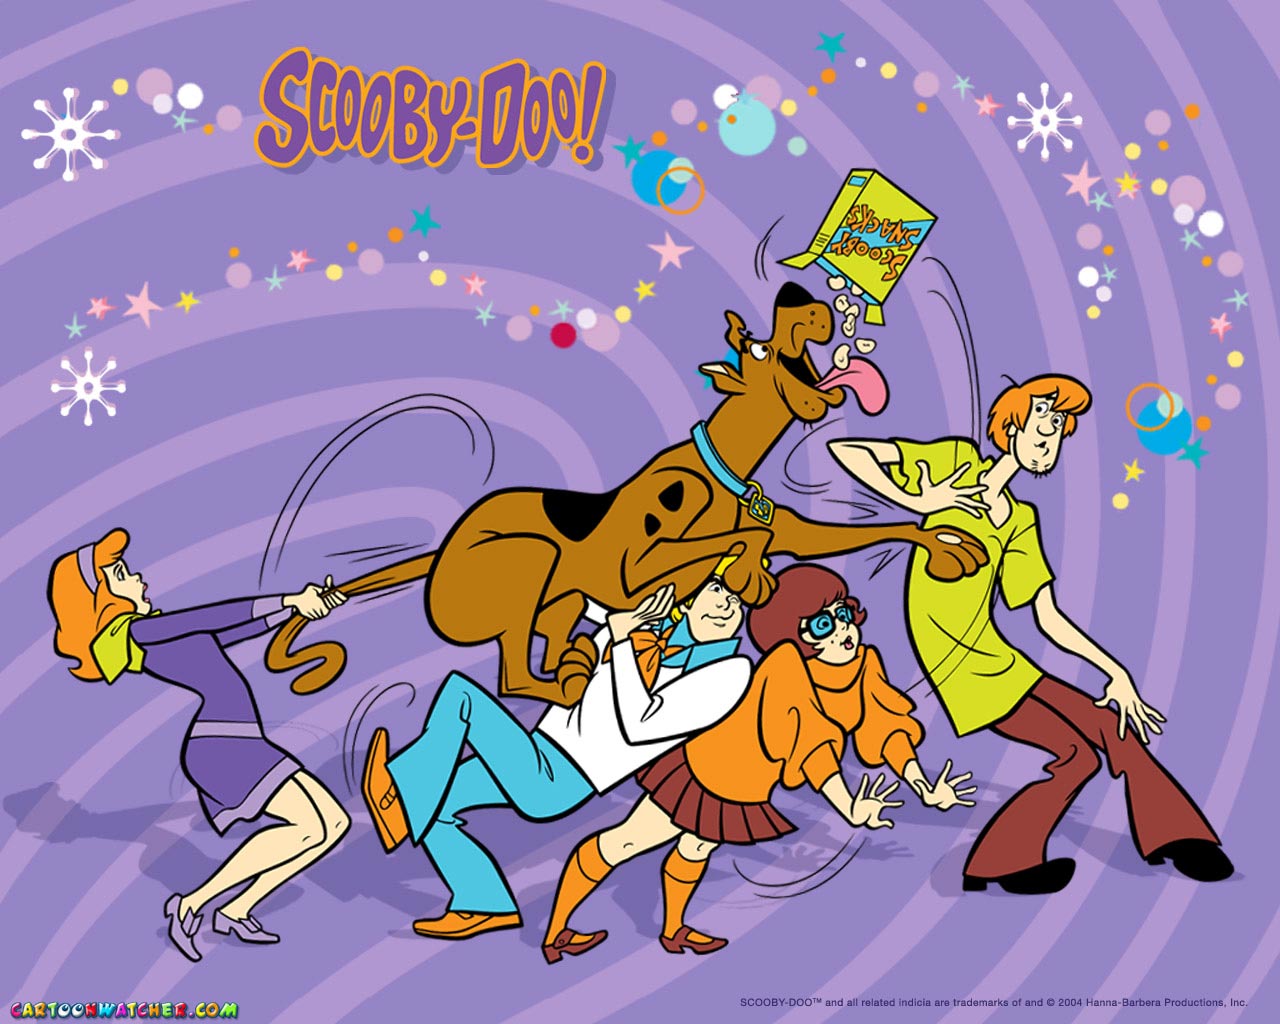 Scooby Doo Wallpaper Scooby Doo with Scooby snacks Scooby Doo Wallpapers